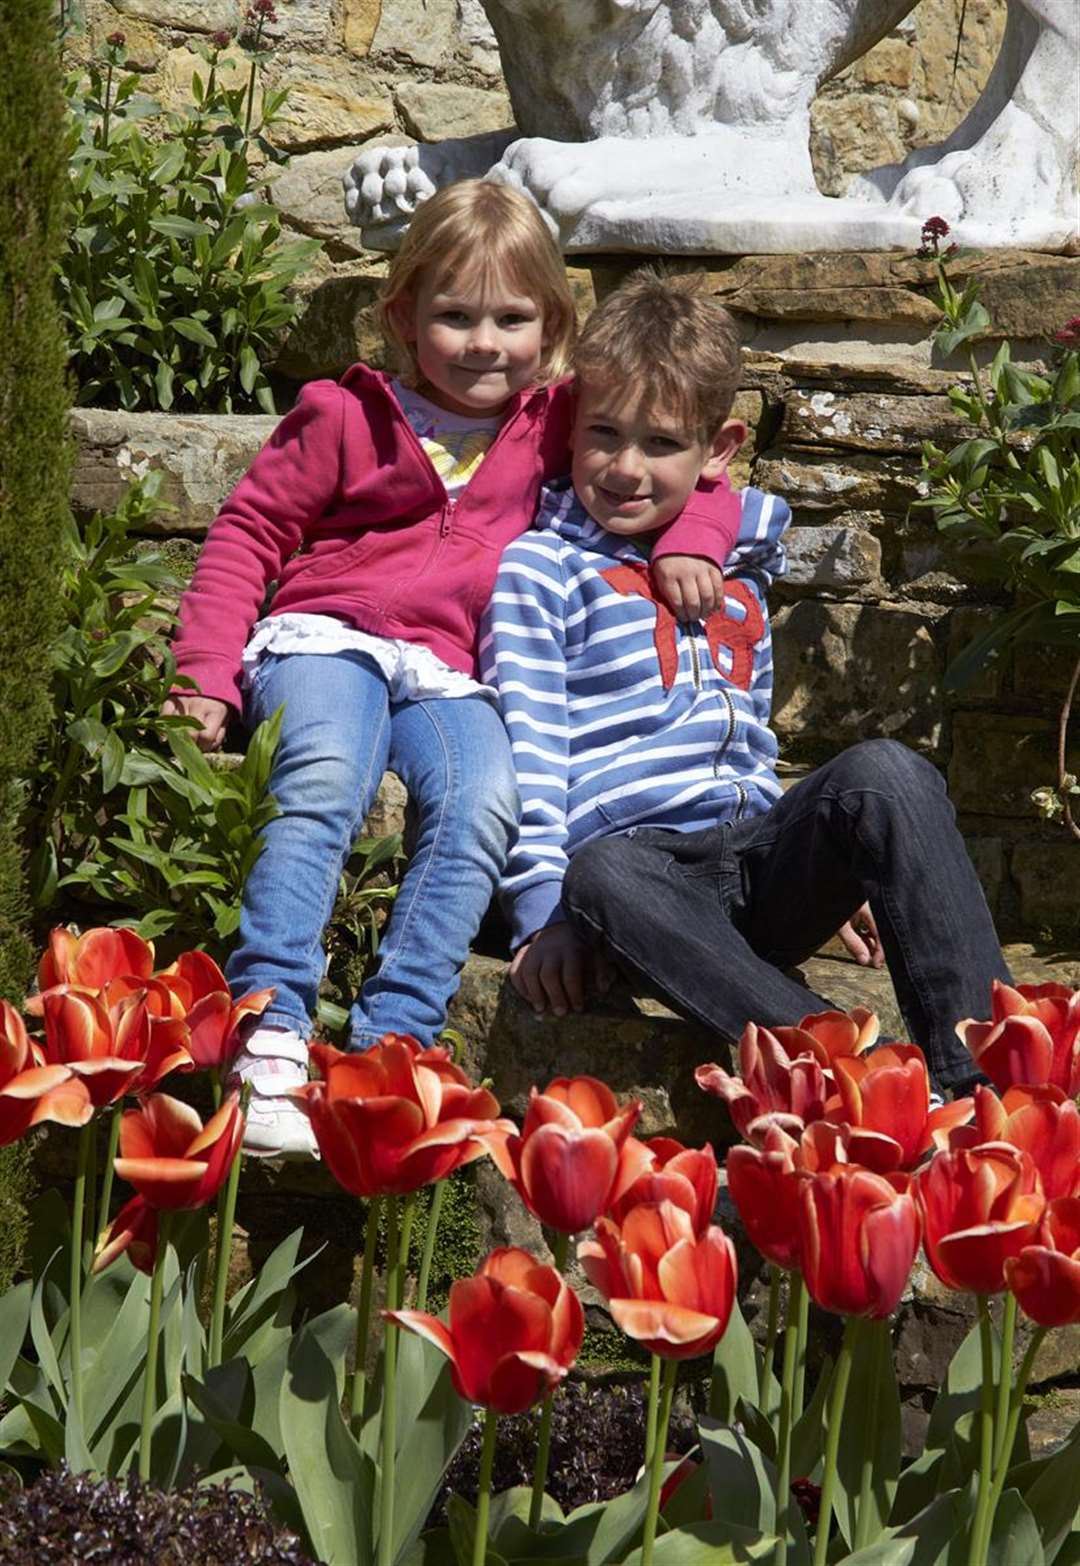 Enjoy the tulip festival at Hever Castle in the sunshine